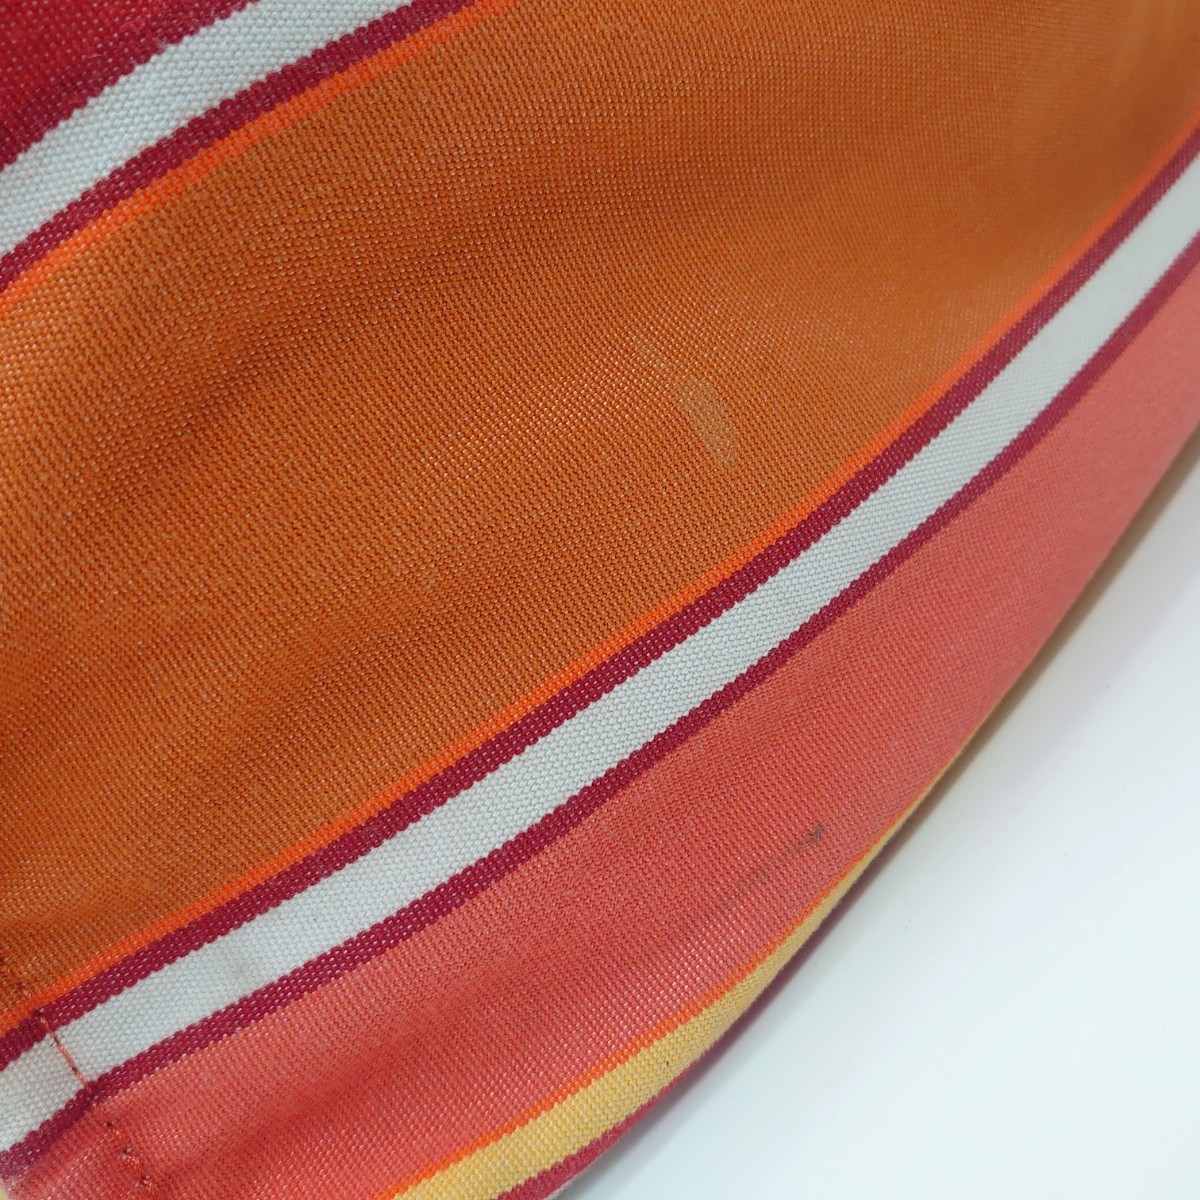 HEAD PORTER sunbrella Headporter Sanbrella collaboration tote bag Yoshida bag canvas pocket border orange tp-23x904